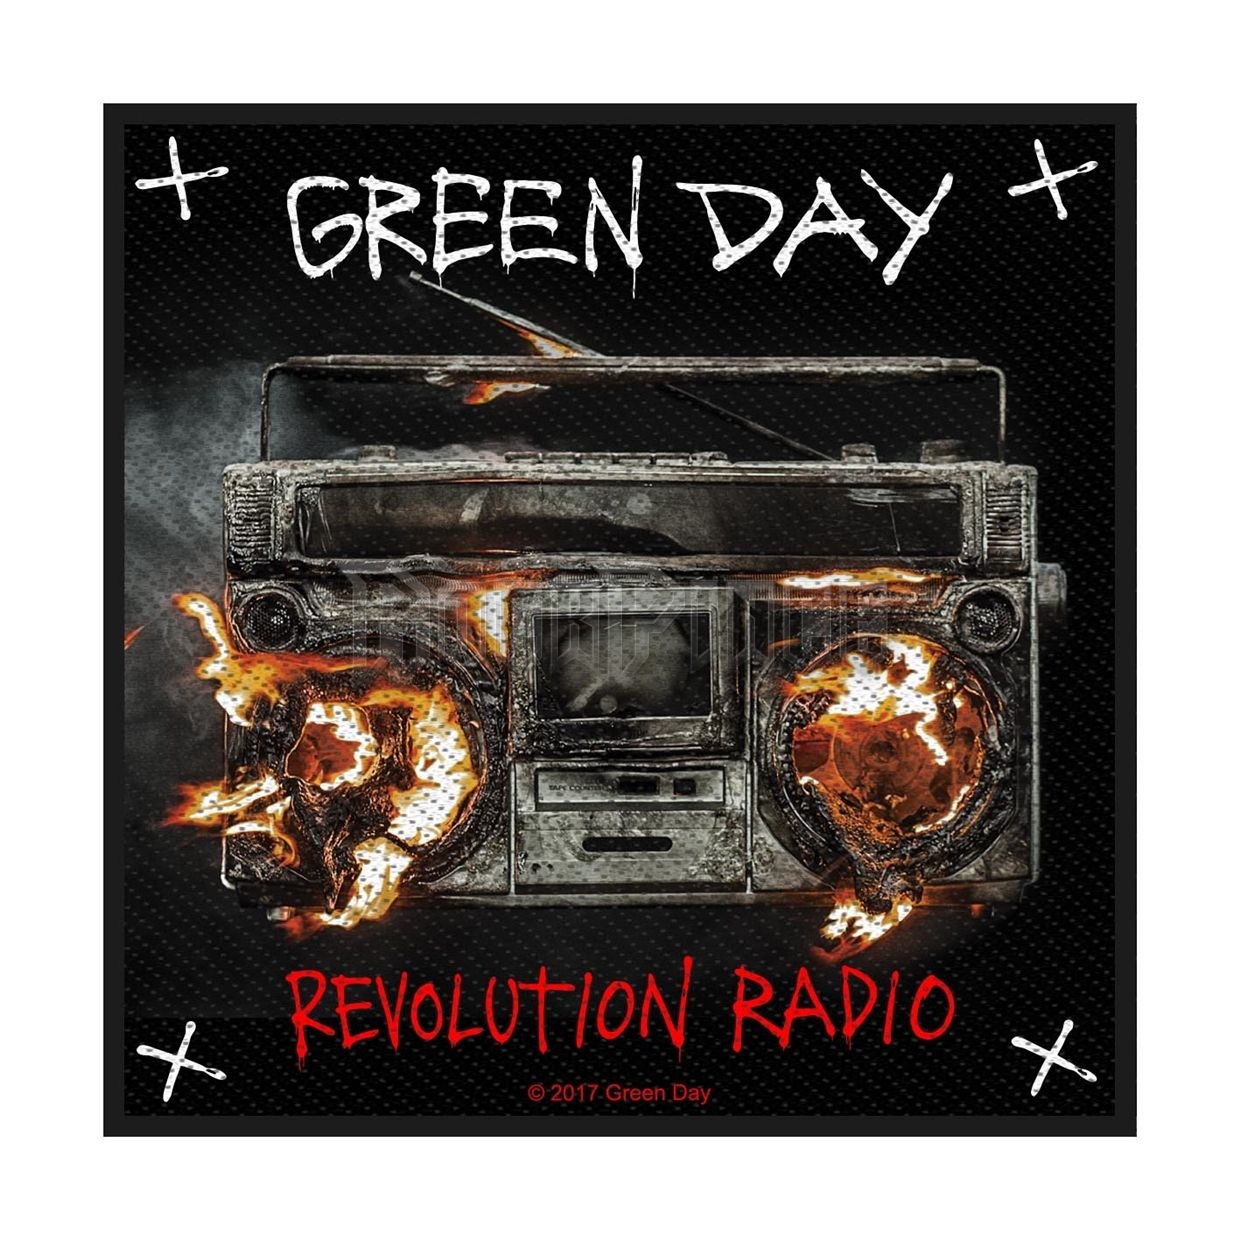 GREEN DAY - REVOLUTION RADIO - kisfelvarró - SP2933